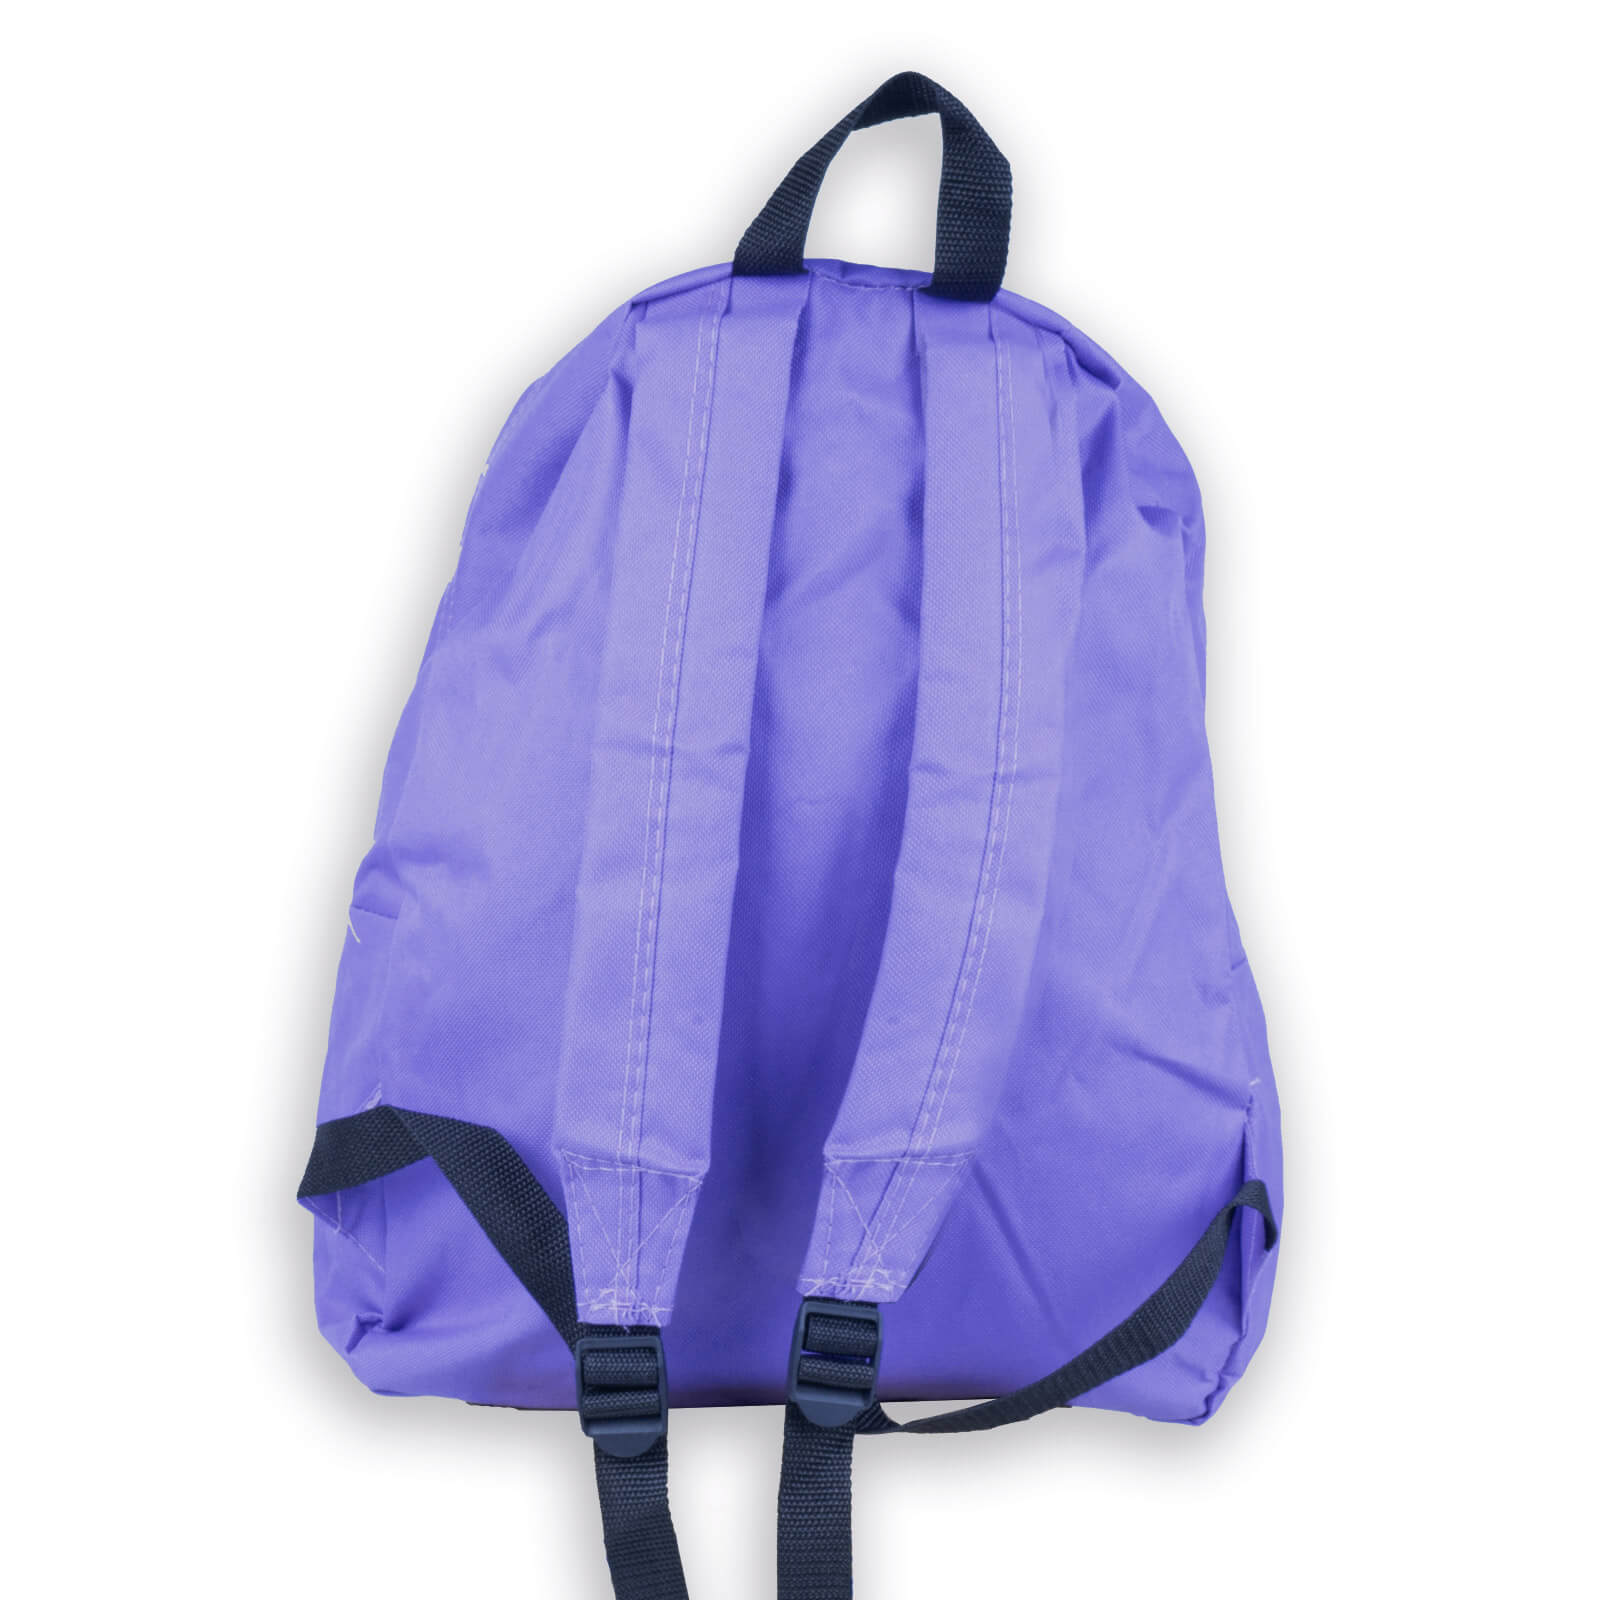 Backpack, Purple - Motive FIH Women's World Cup